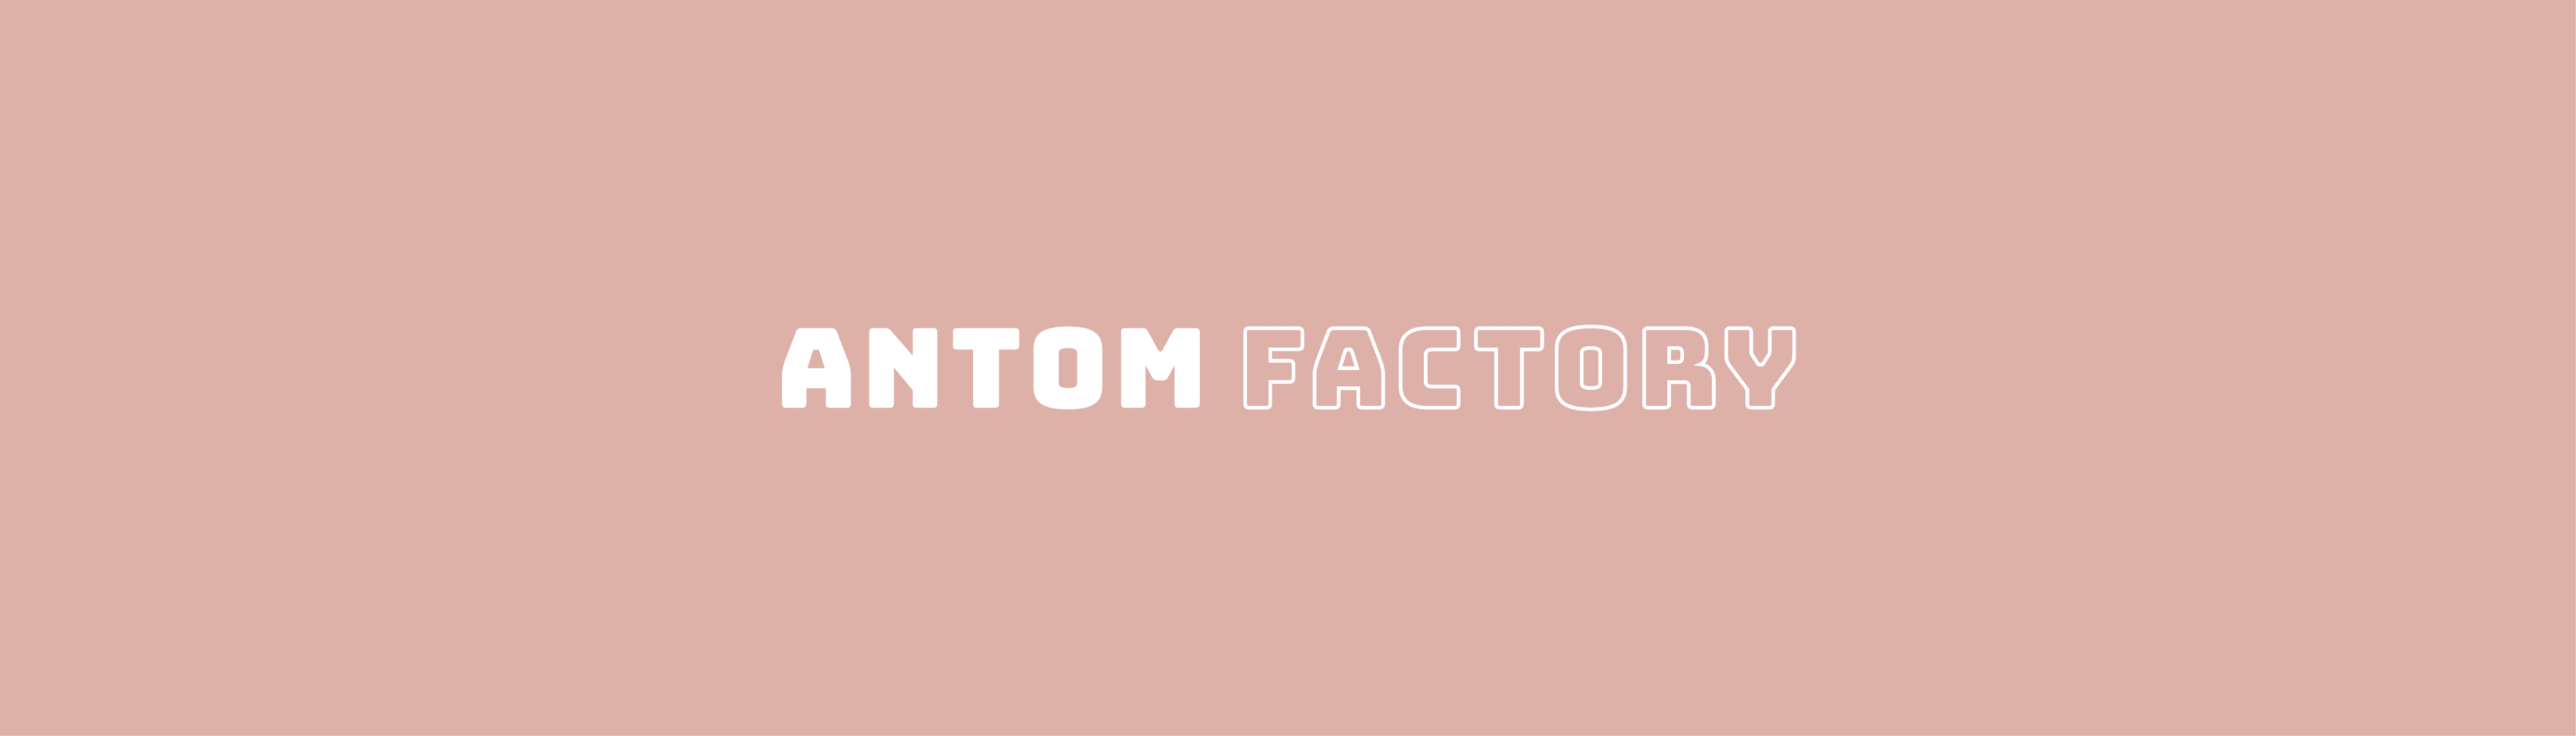 Antom_Factory 橫幅